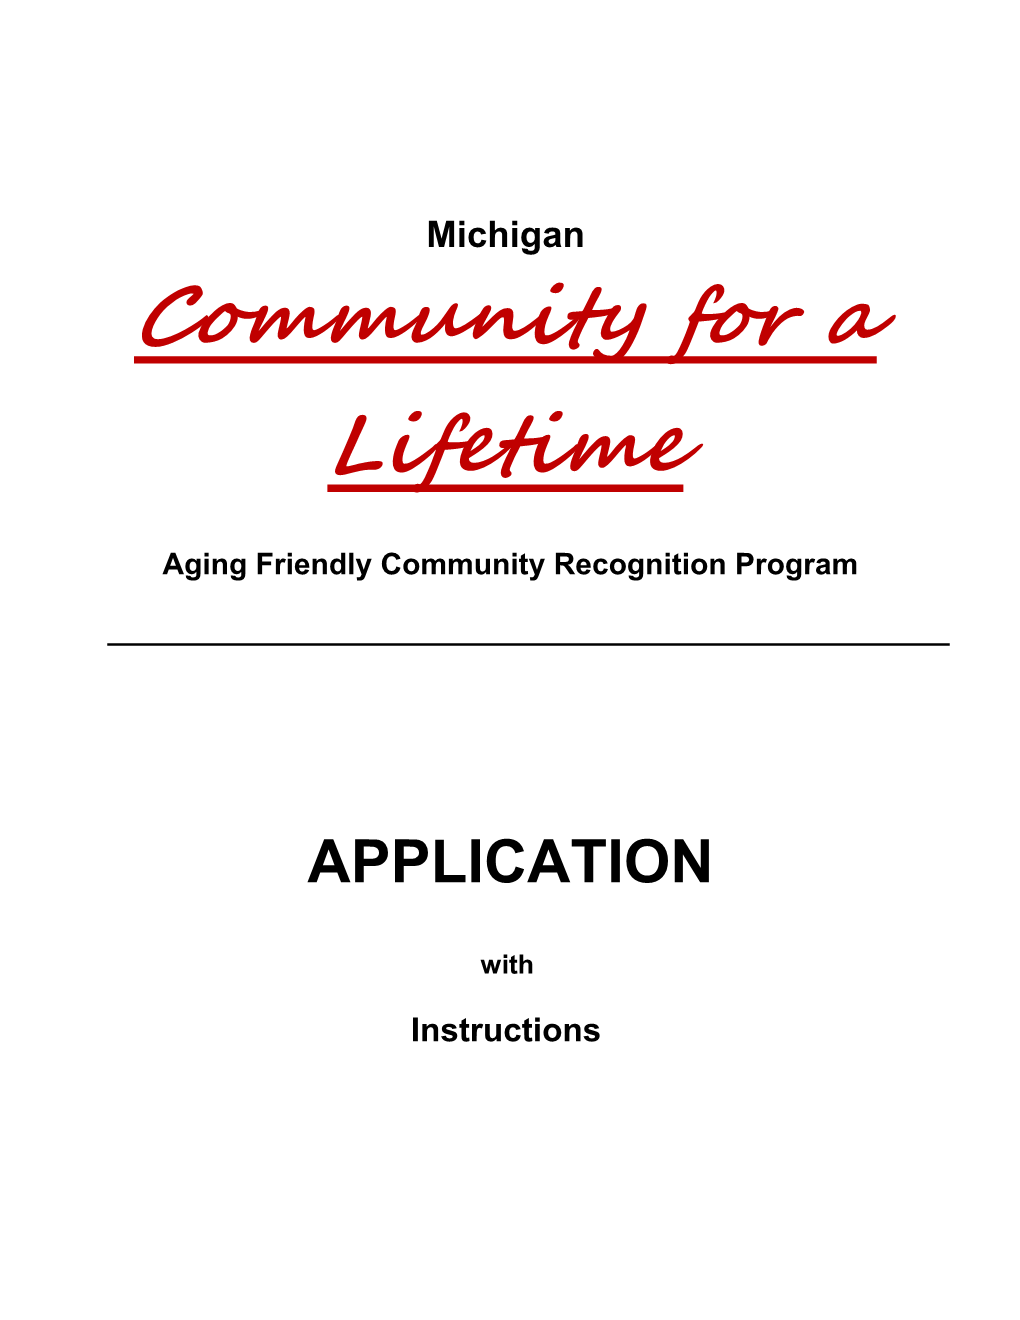 Michigan Community for a Lifetime